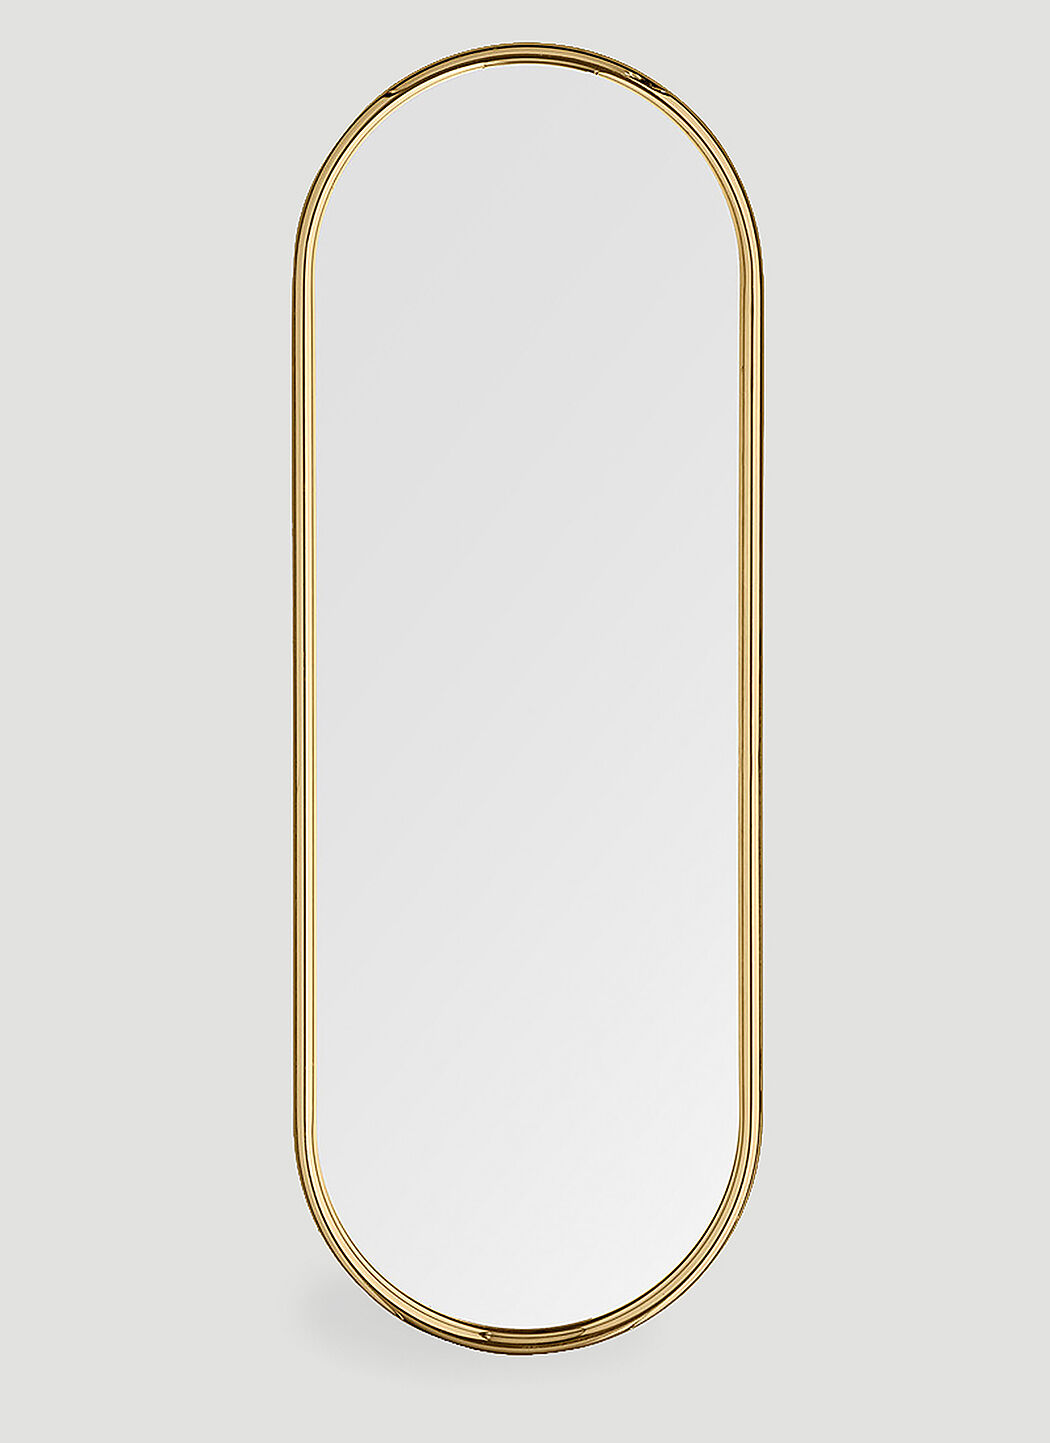 Marloe Marloe Large Angui Mirror クリーム rlo0351006